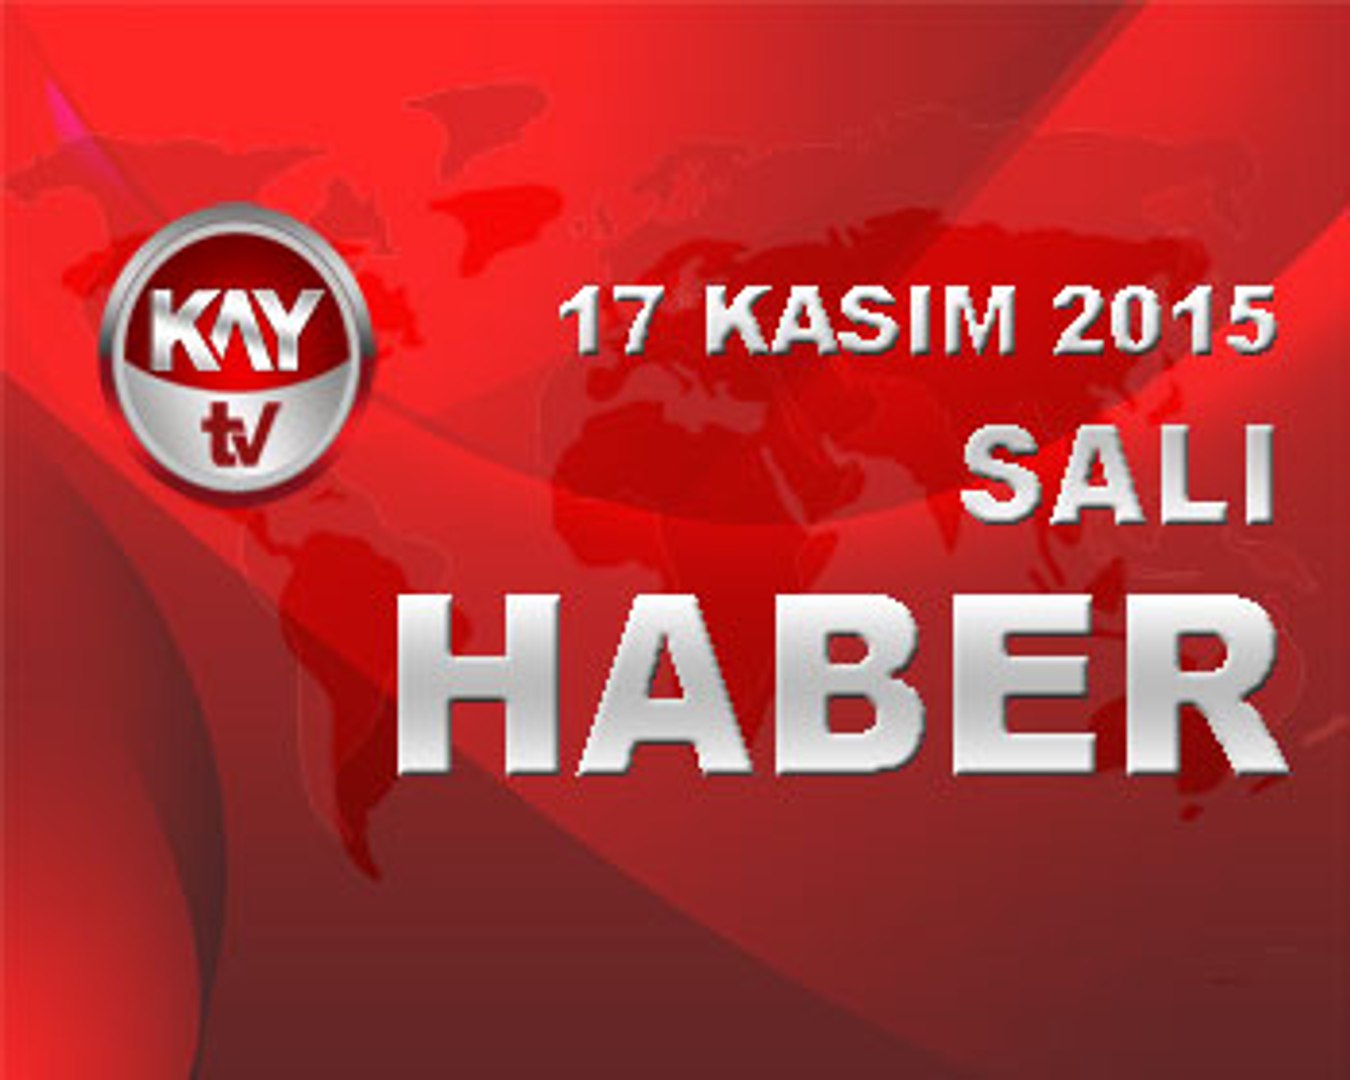 17 KASIM 2015 KAYTV HABER - Dailymotion Video